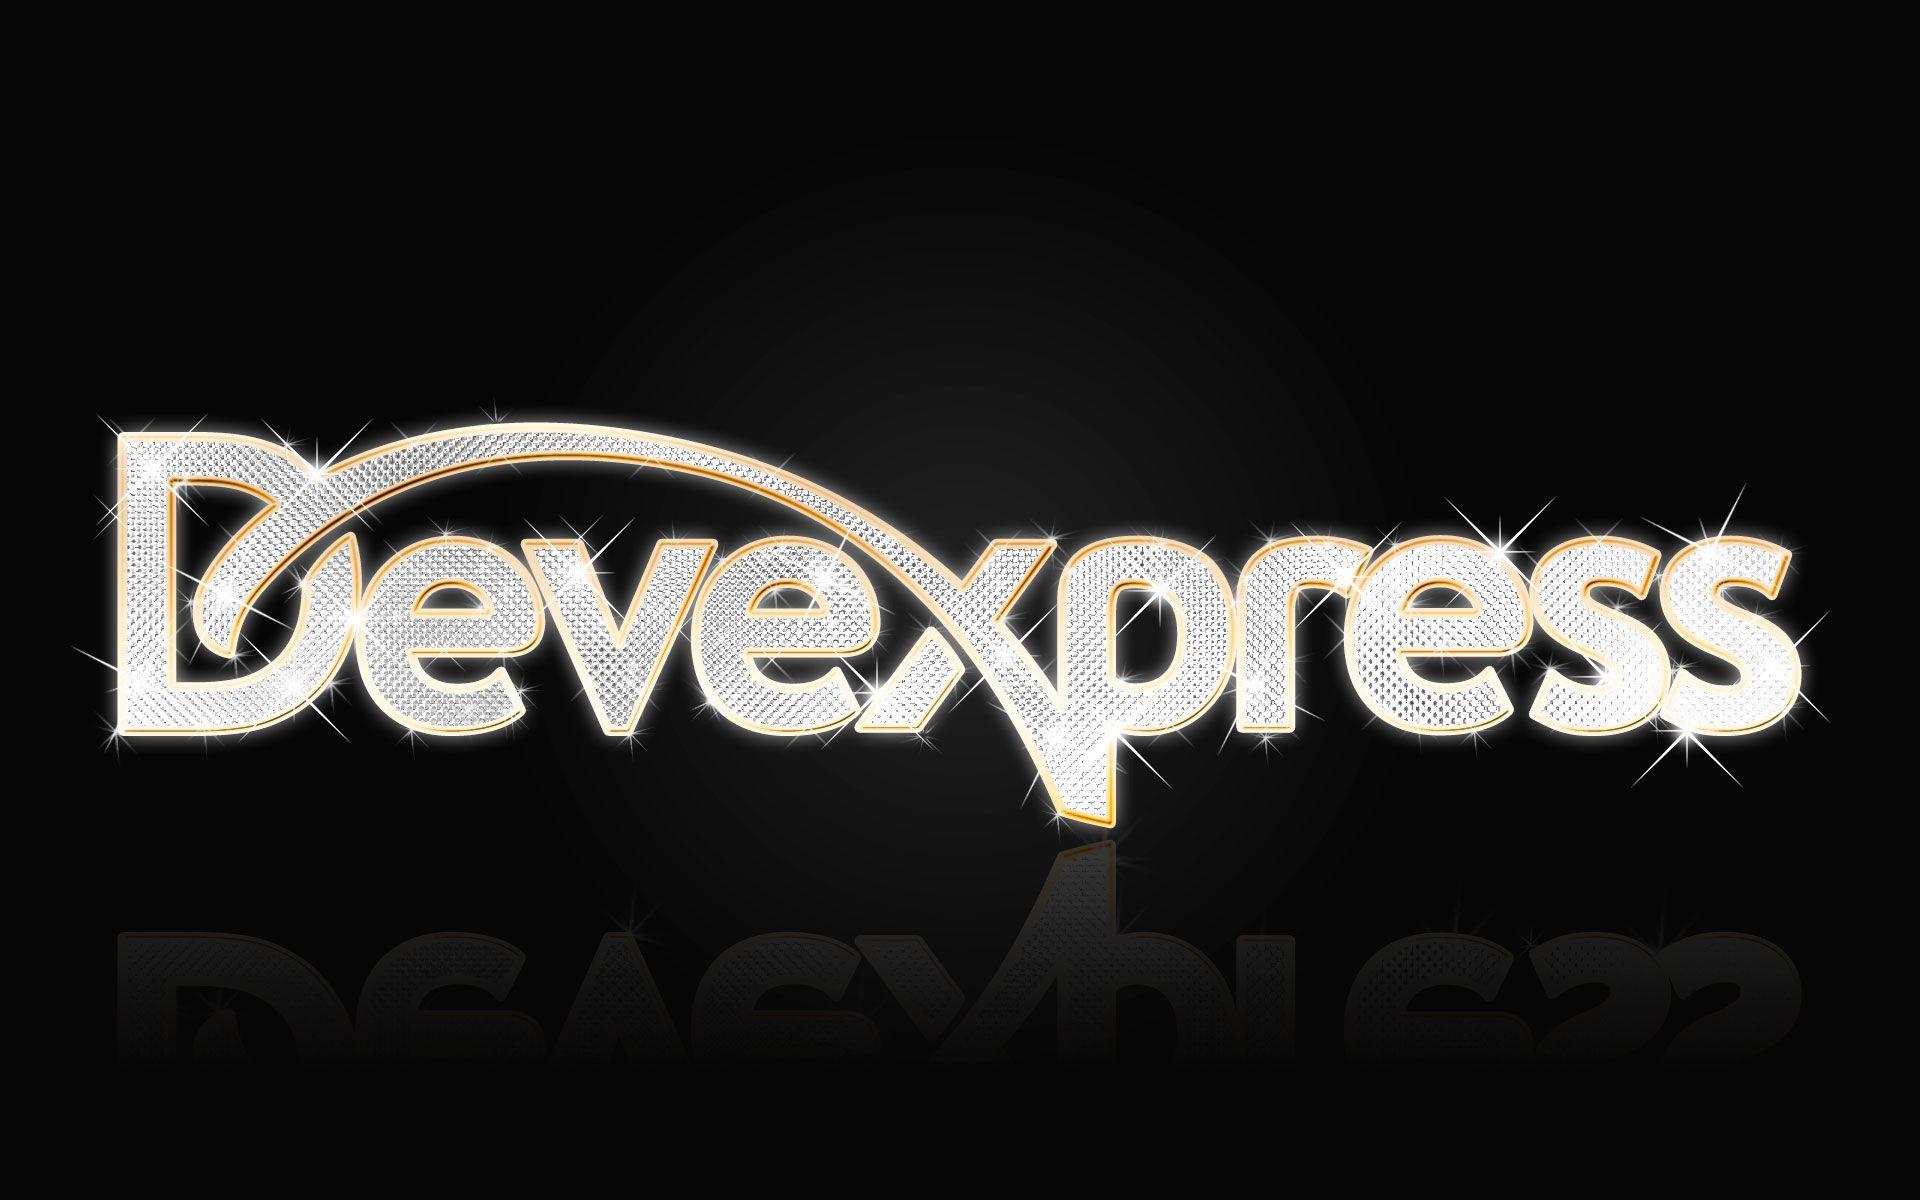 Beautiful And Free Wallpaper for DevExpress Fans.NET Team